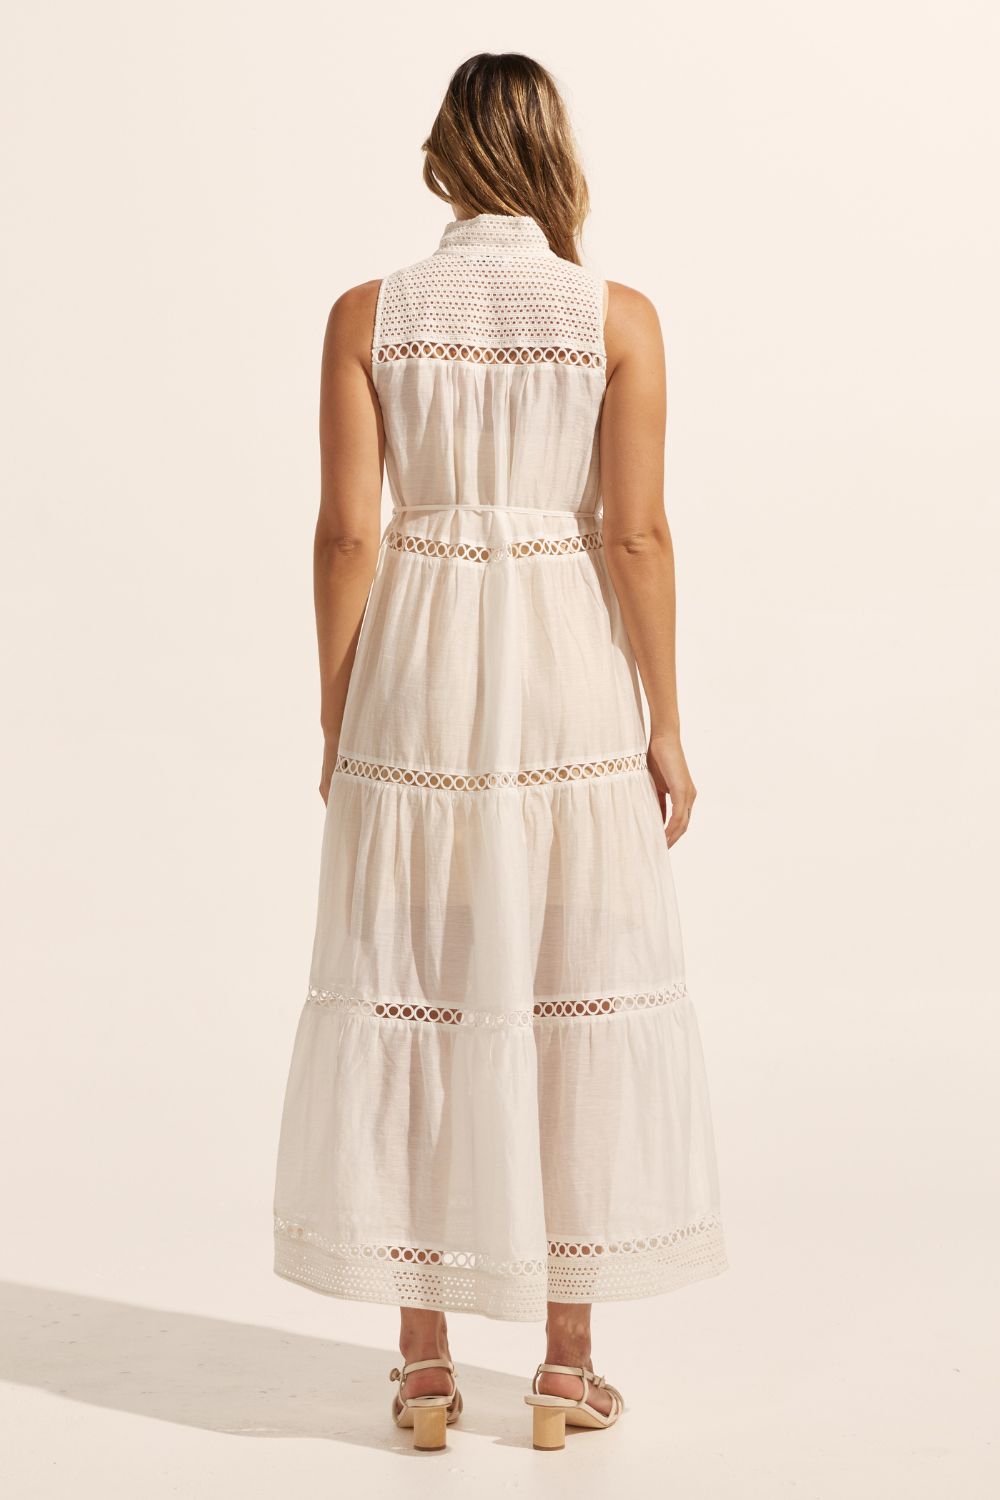 white, maxi dress, sleeveless, button down centre, high neck, circular lace design, self tie fabric belt, back image